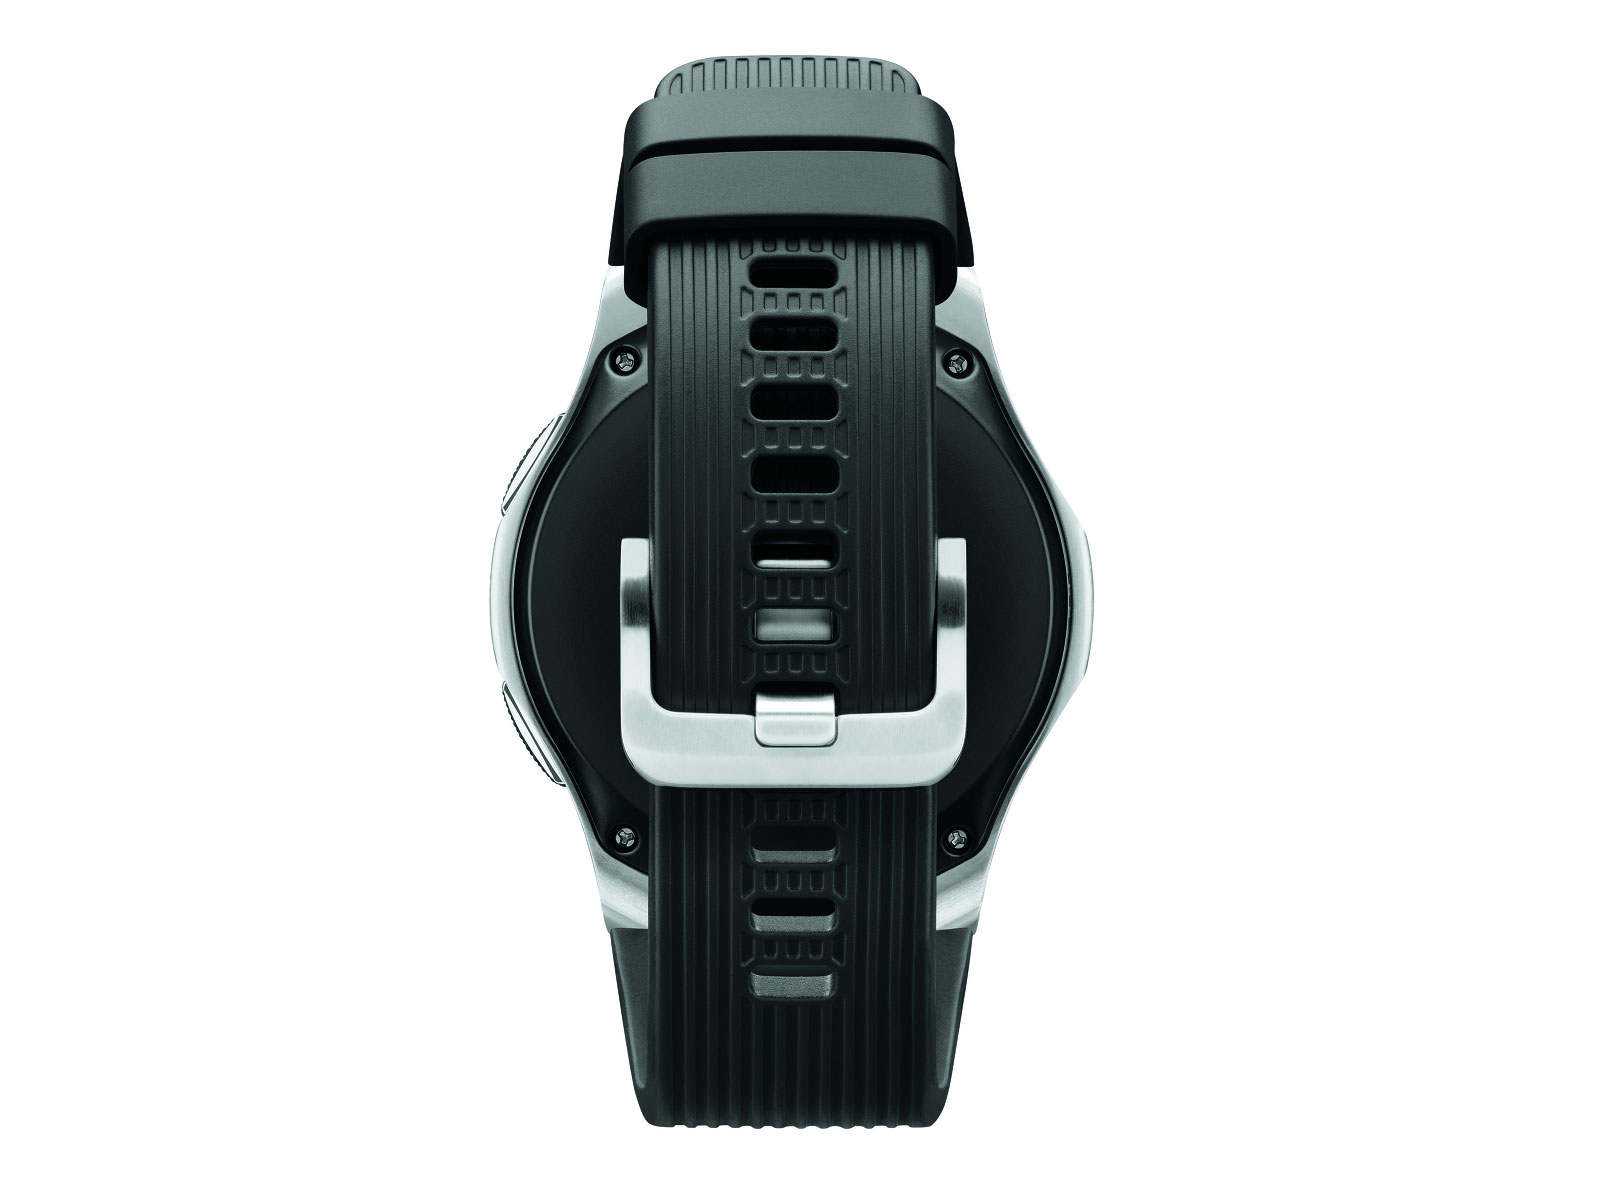 SAMSUNG Galaxy Watch - Bluetooth Smart Watch (46mm) - Silver - SM-R800NZSAXAR  